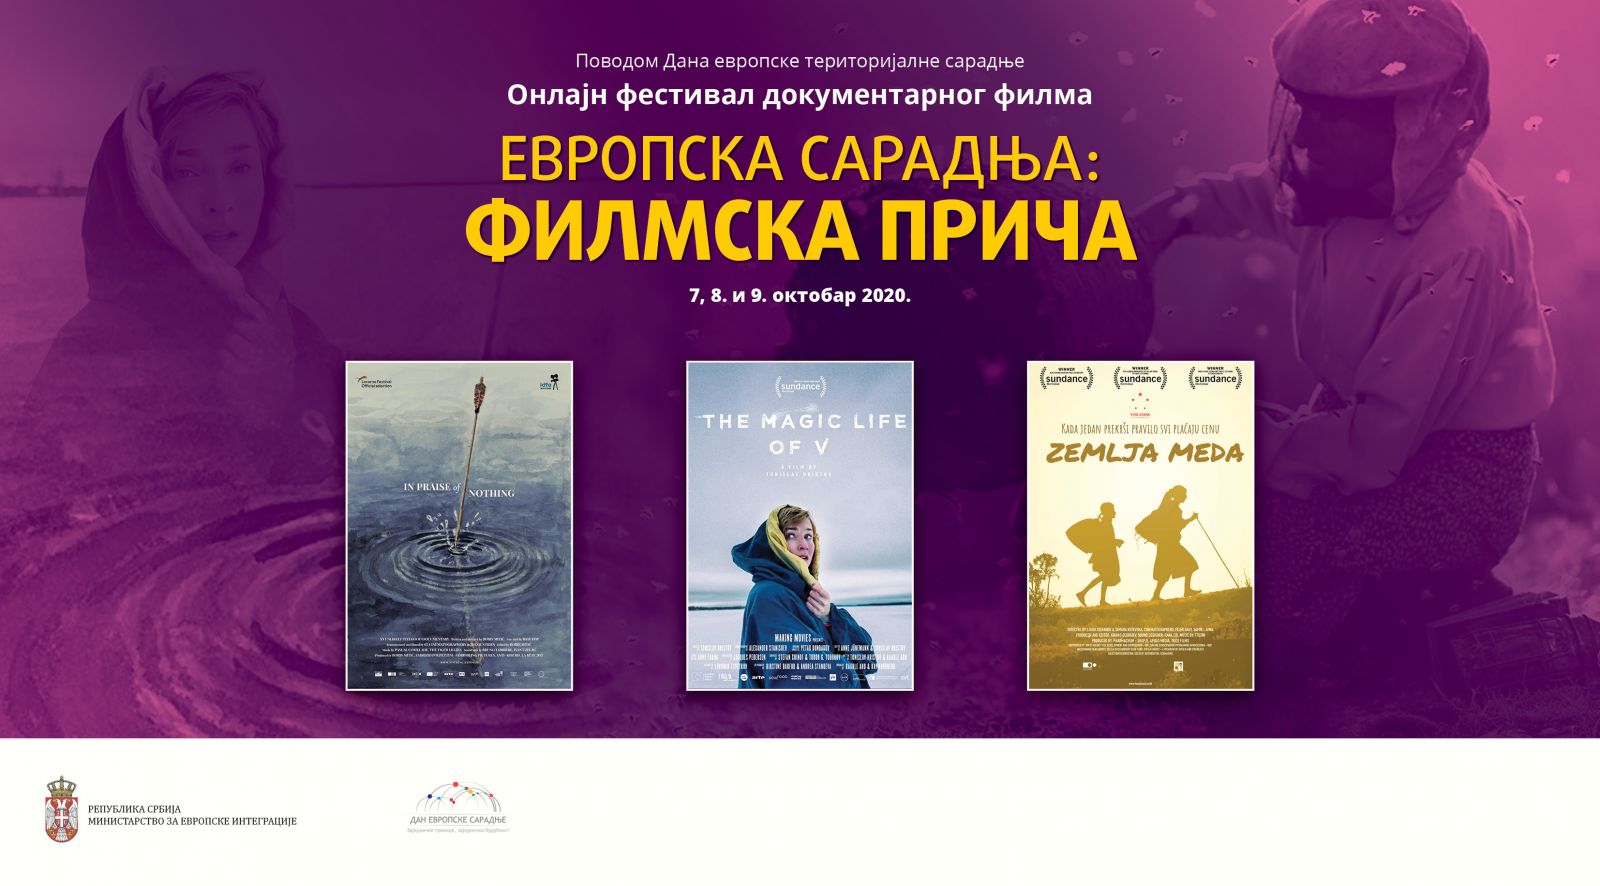 Online festival ‘European Cooperation: Film Story’ starts tomorrow